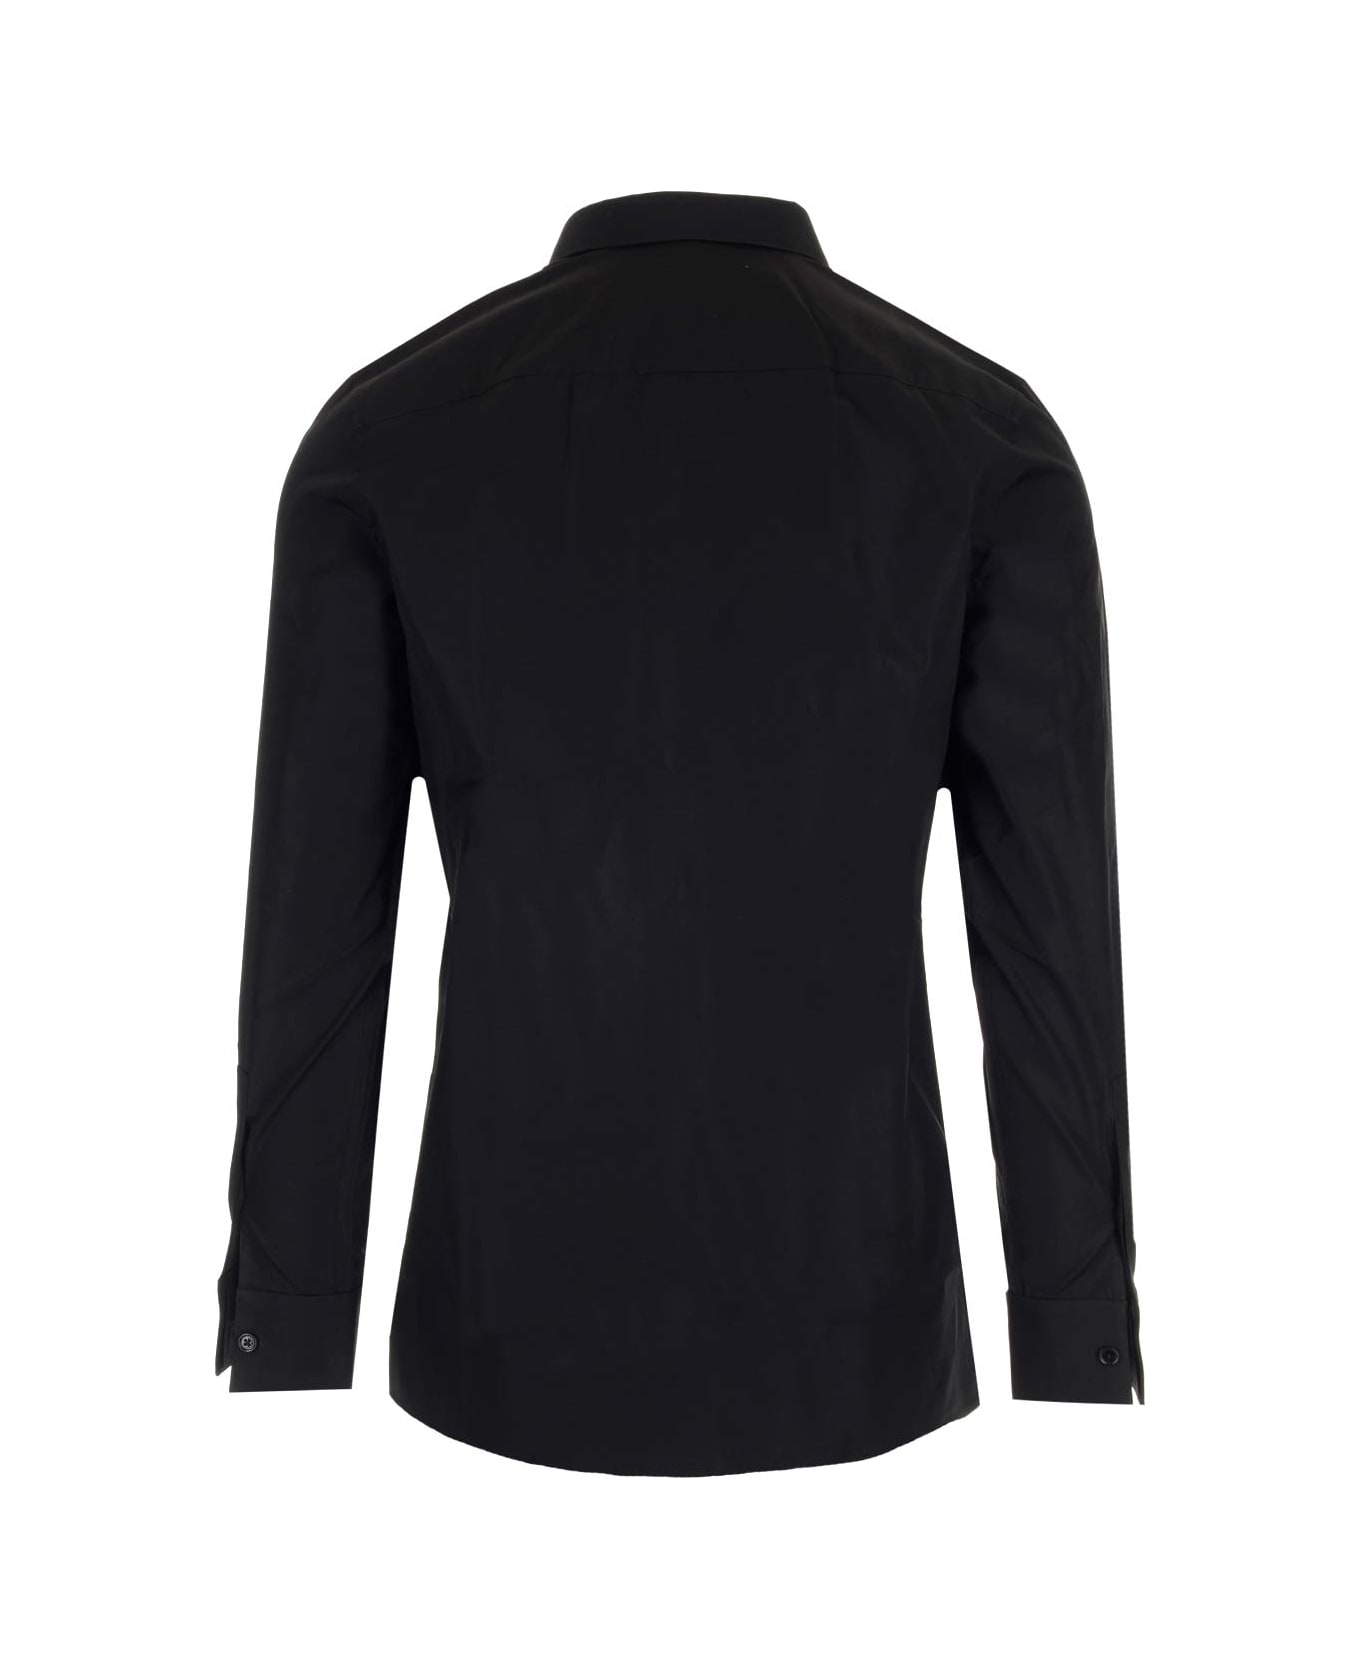 Givenchy Black Shirt - Black